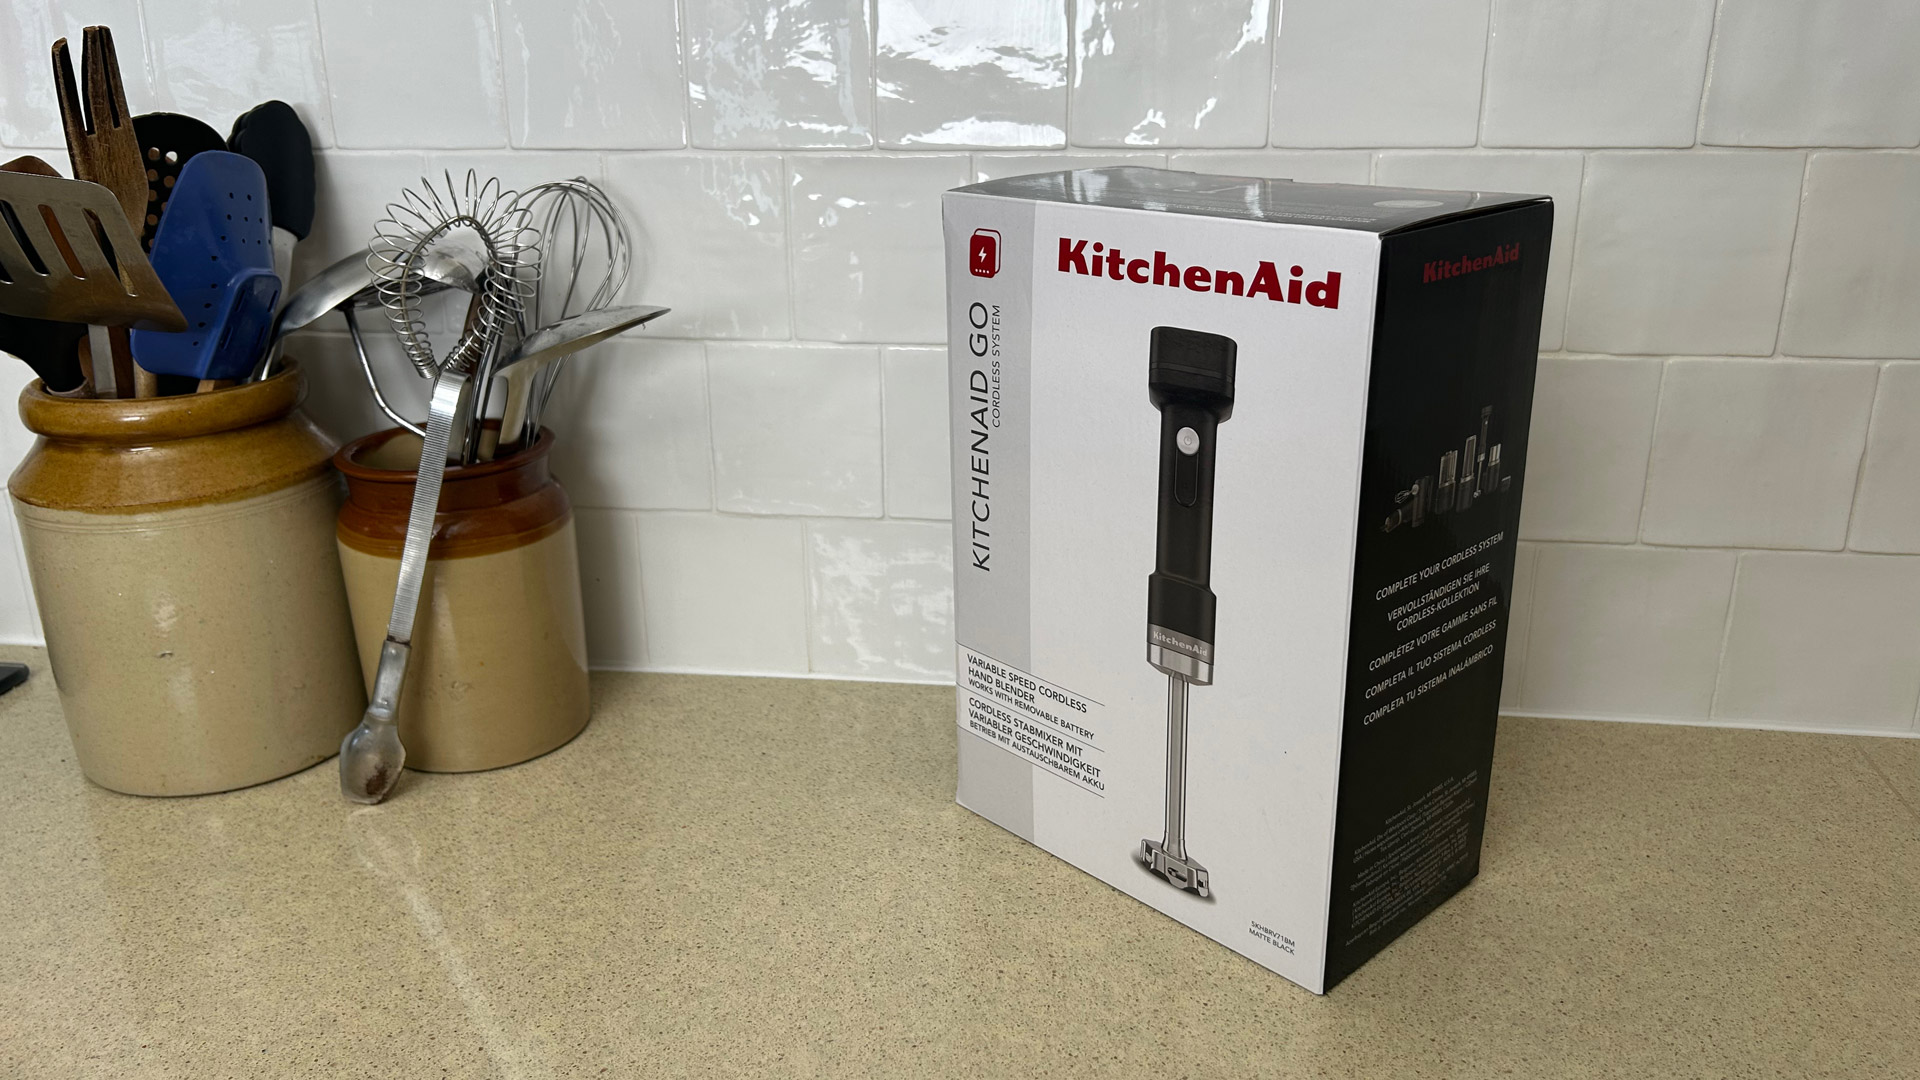 KitchenAid Go Cordless Hand Blender in its box